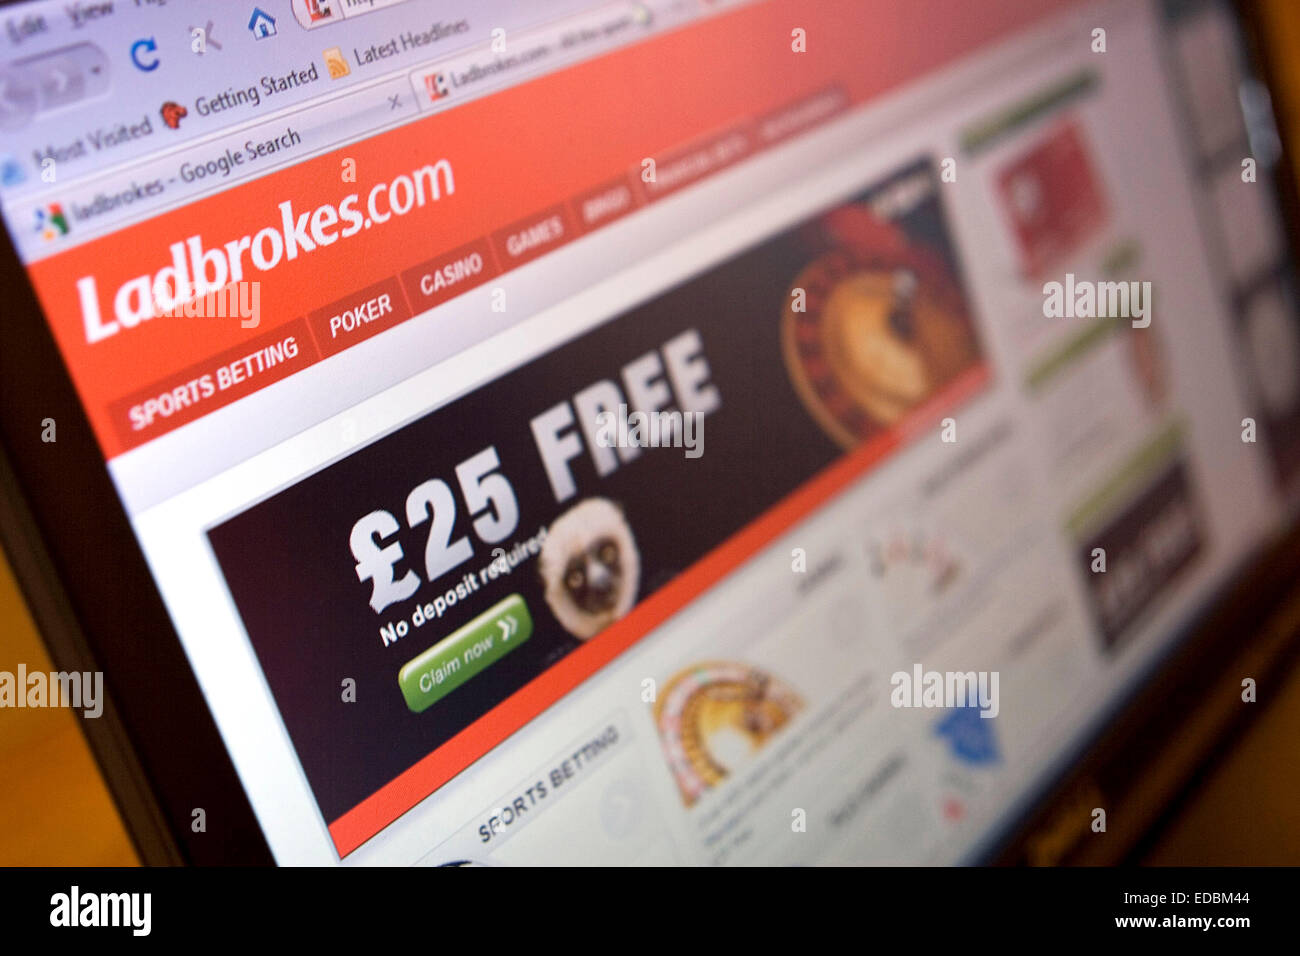 Illustrative image of Ladbrokes.com online betting site. Stock Photo